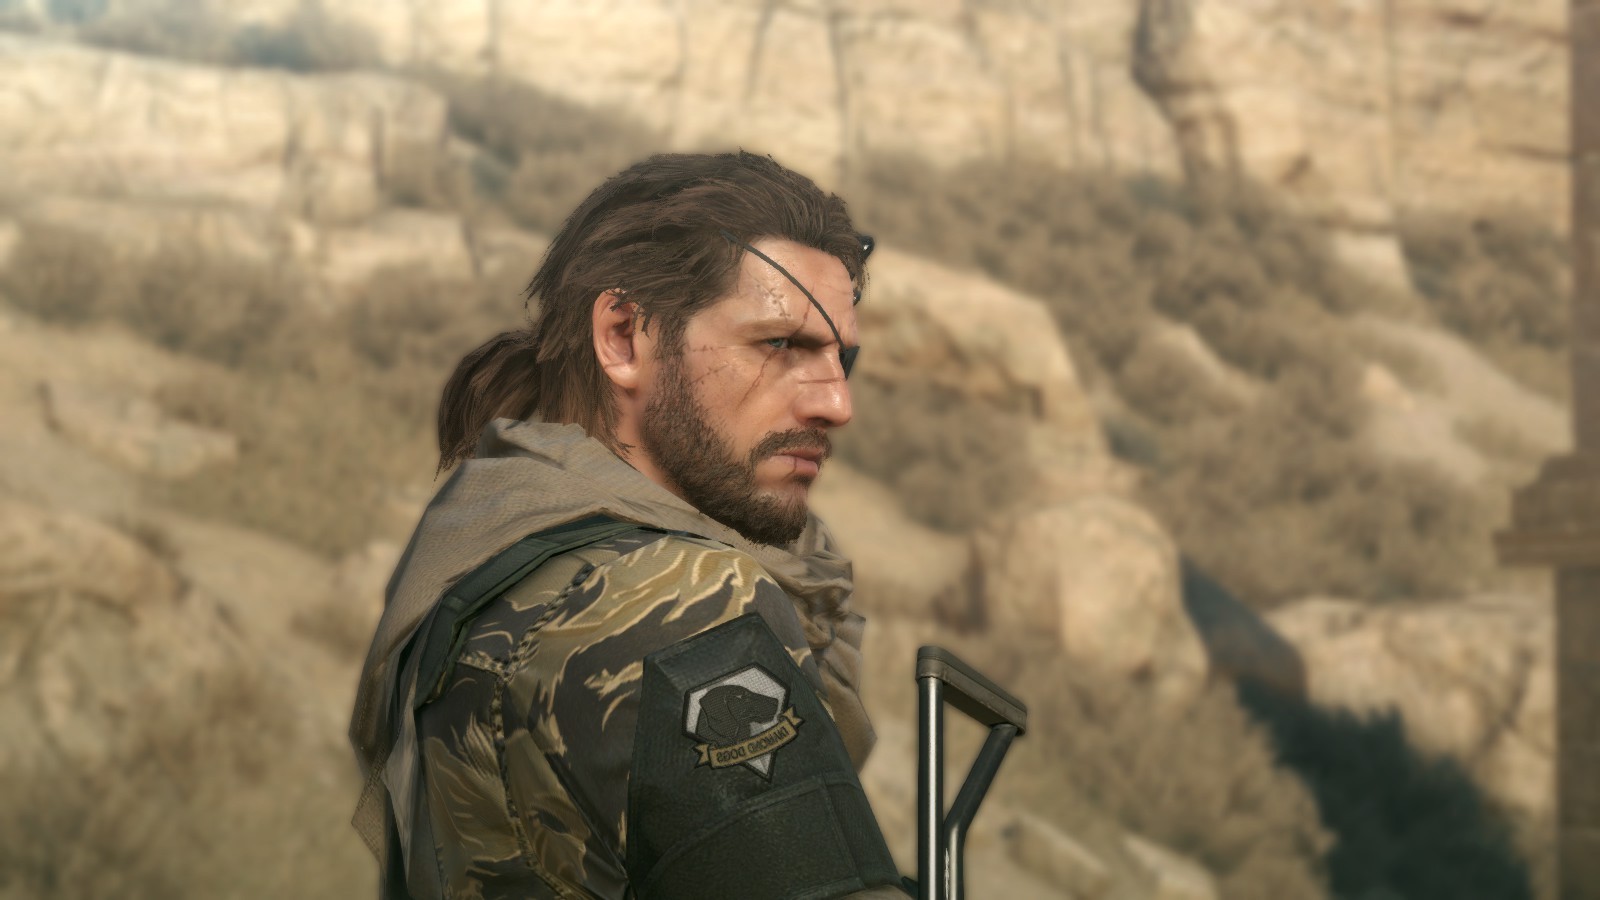 Metal Gear, Screenshots, Video Games Wallpaper